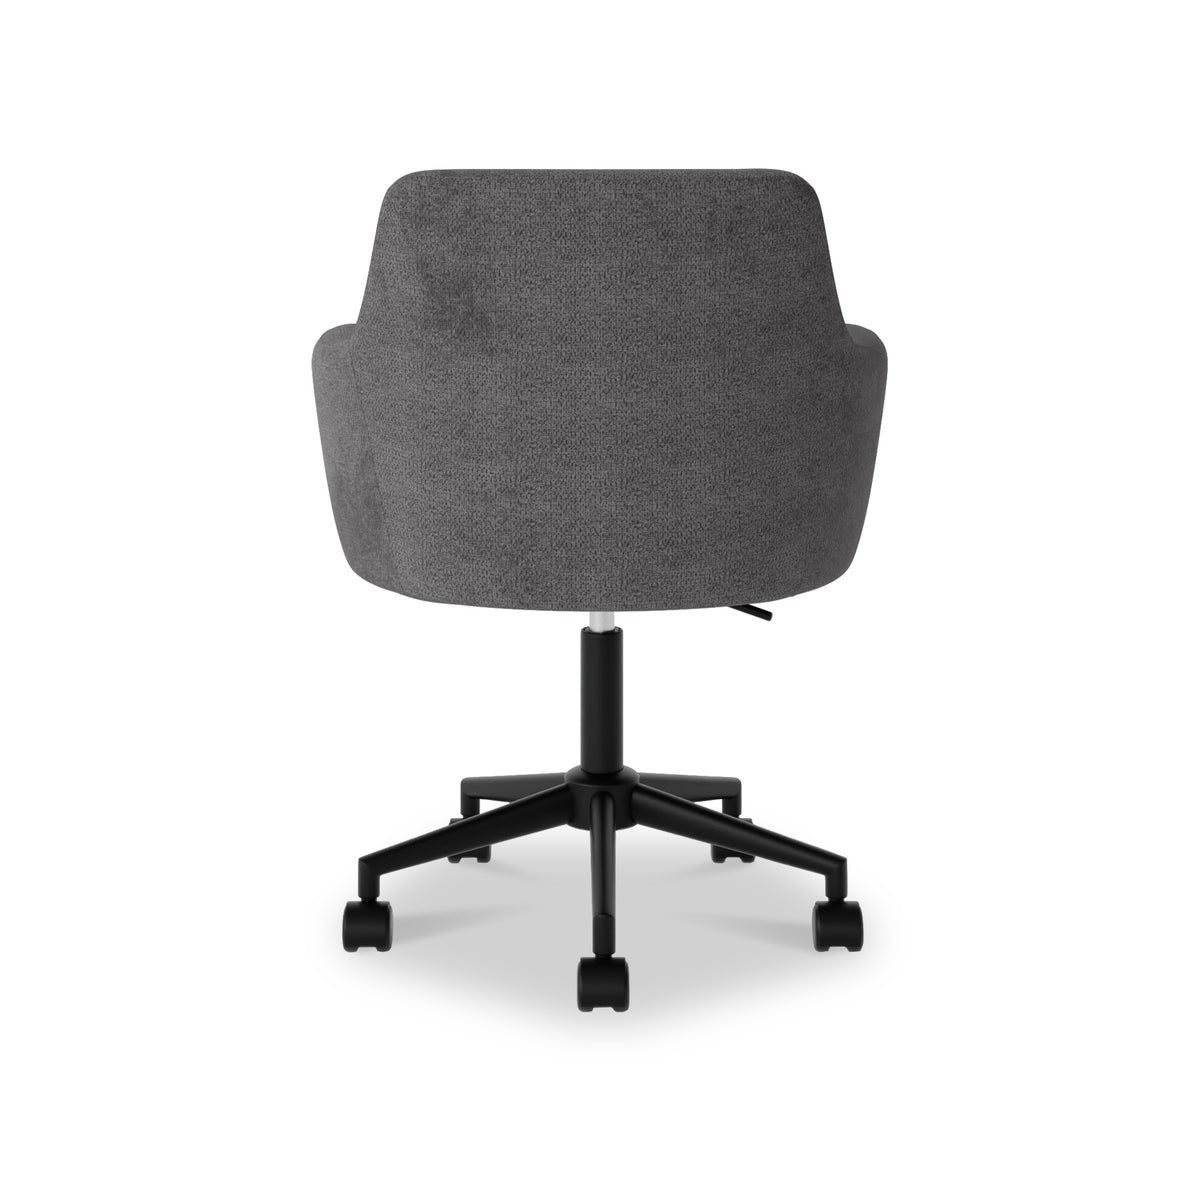 Elsa Height Adjustable Swivel Office Chair